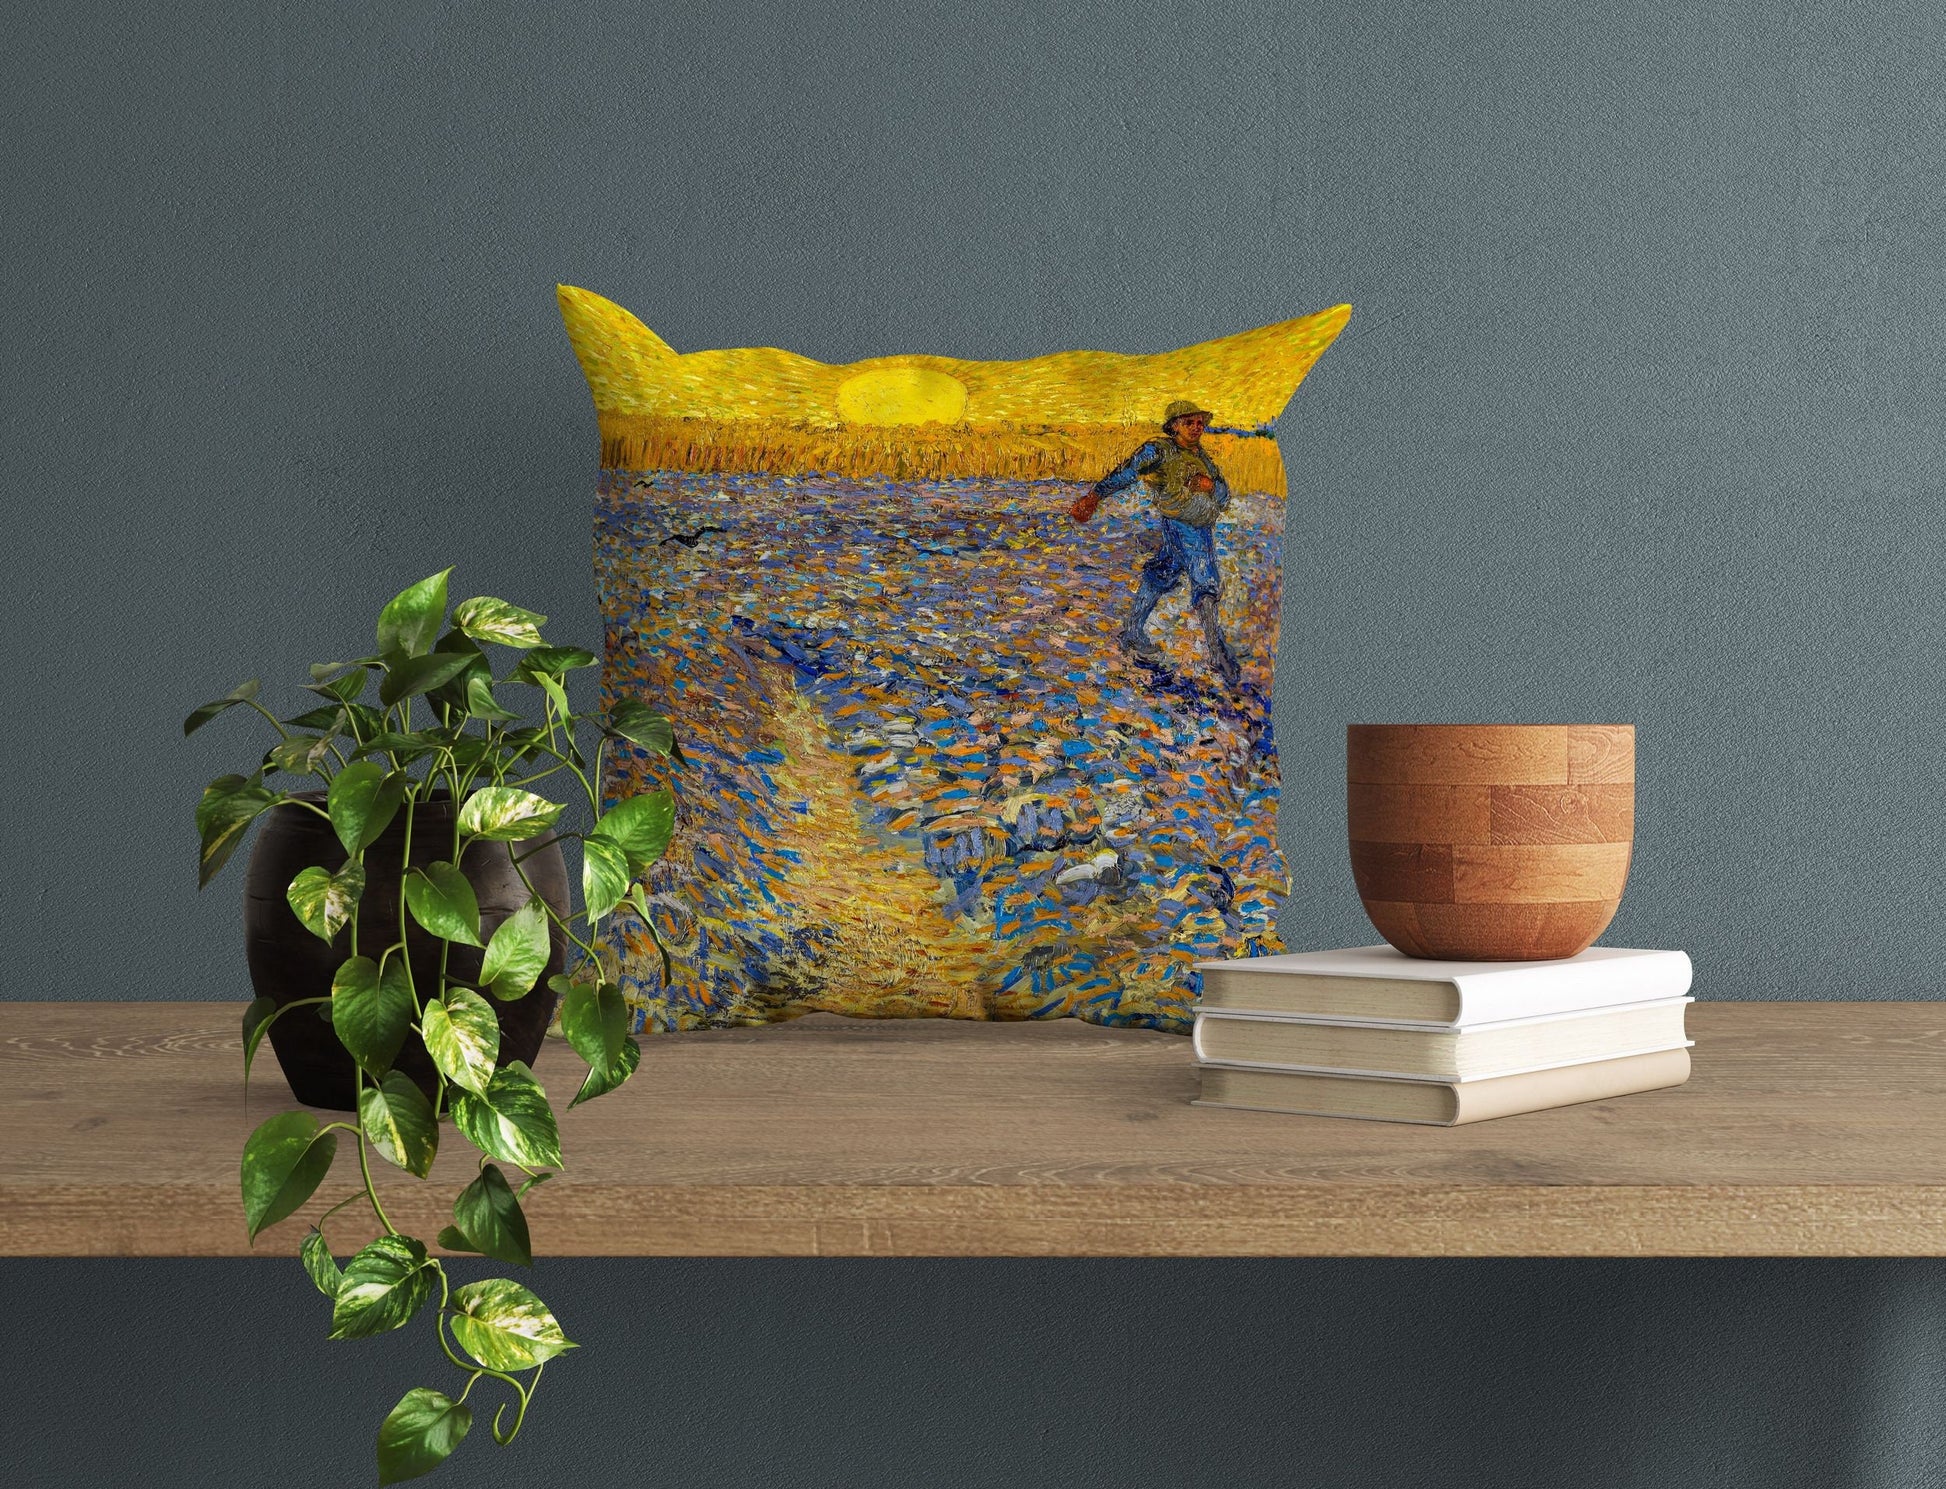 Vincent Van Gogh Famous Art The Sower, Throw Pillow, Abstract Pillow, Art Pillow, Bright Yellow Pillow, 22X22 Pillow Cover